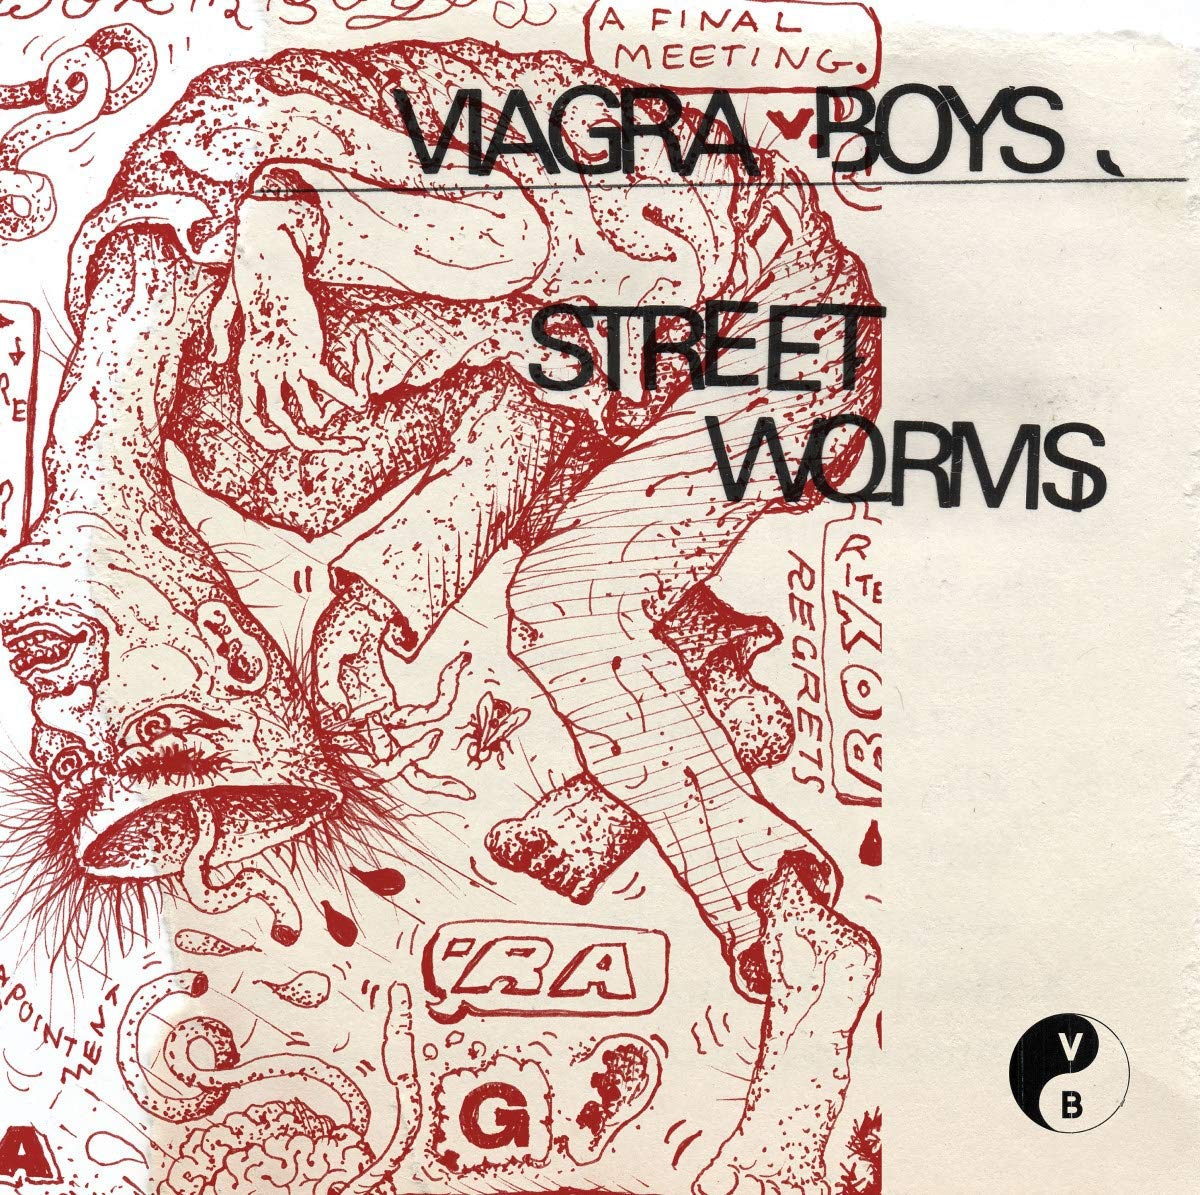 Viagra Boys Street Worms -deluxe-